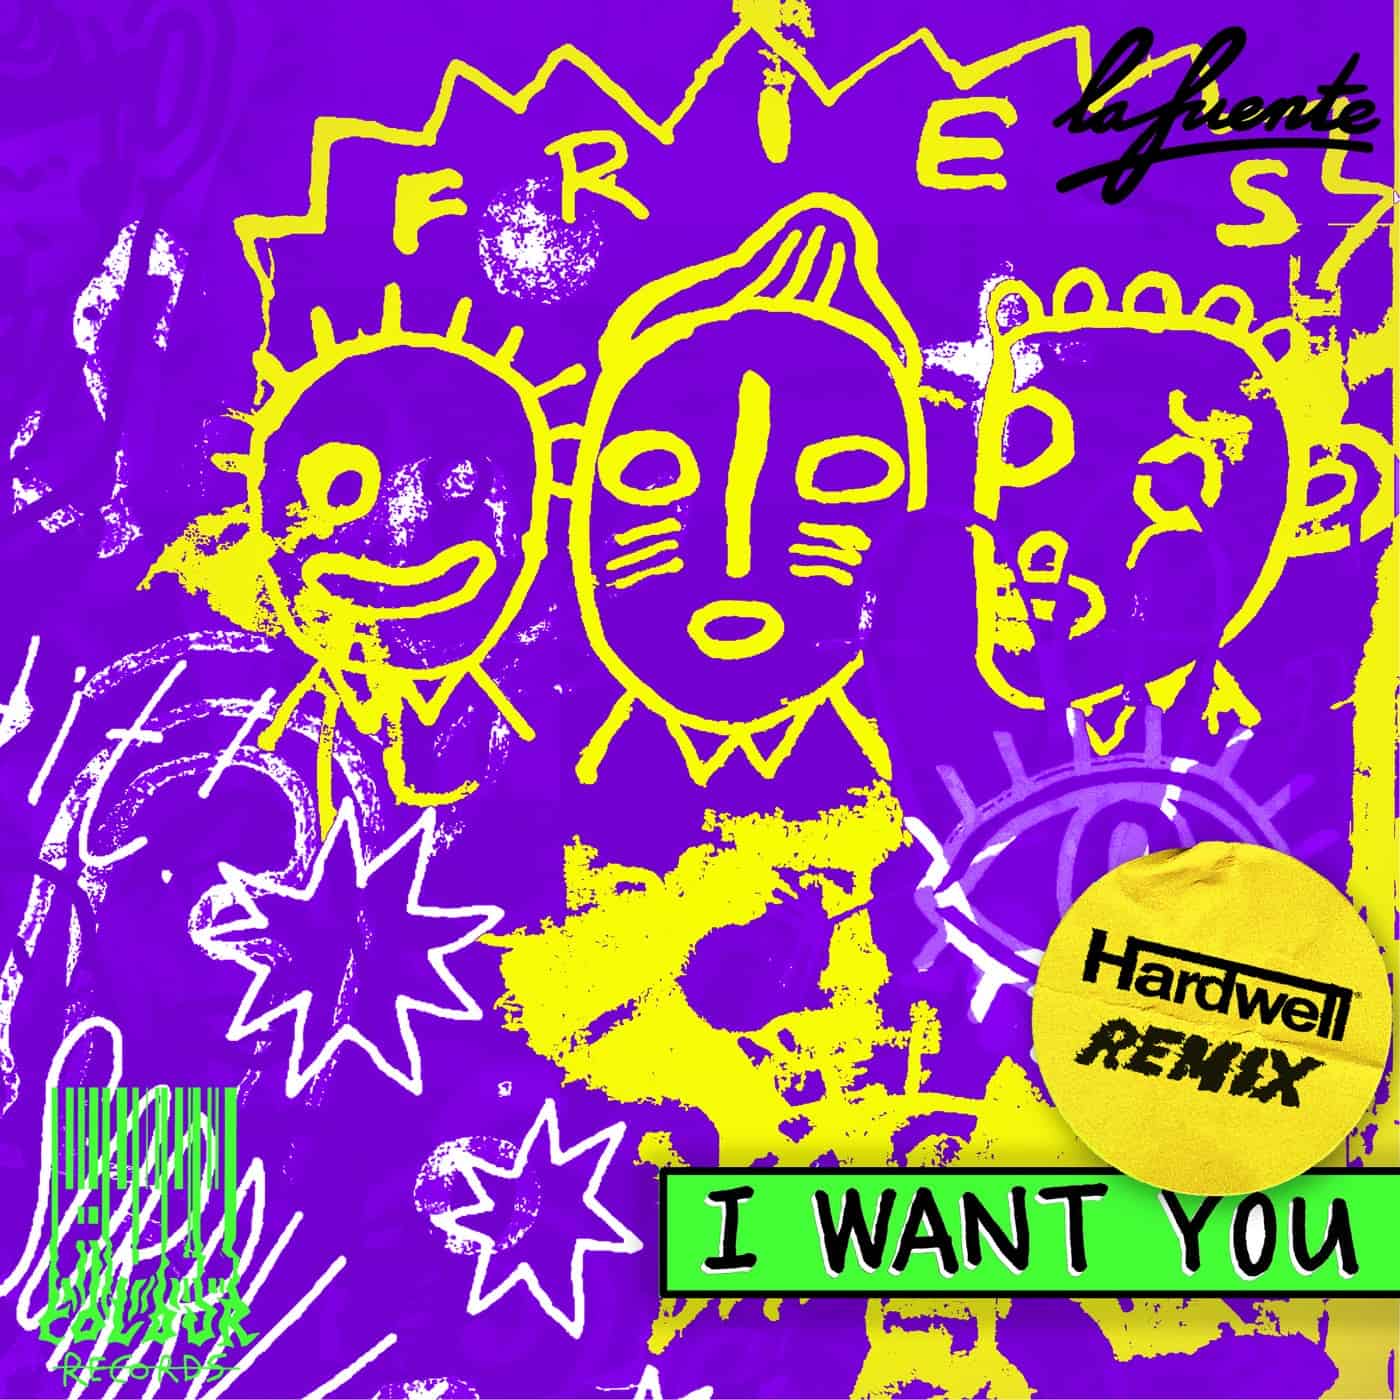 Download La Fuente - I Want You - Hardwell Remix on Electrobuzz